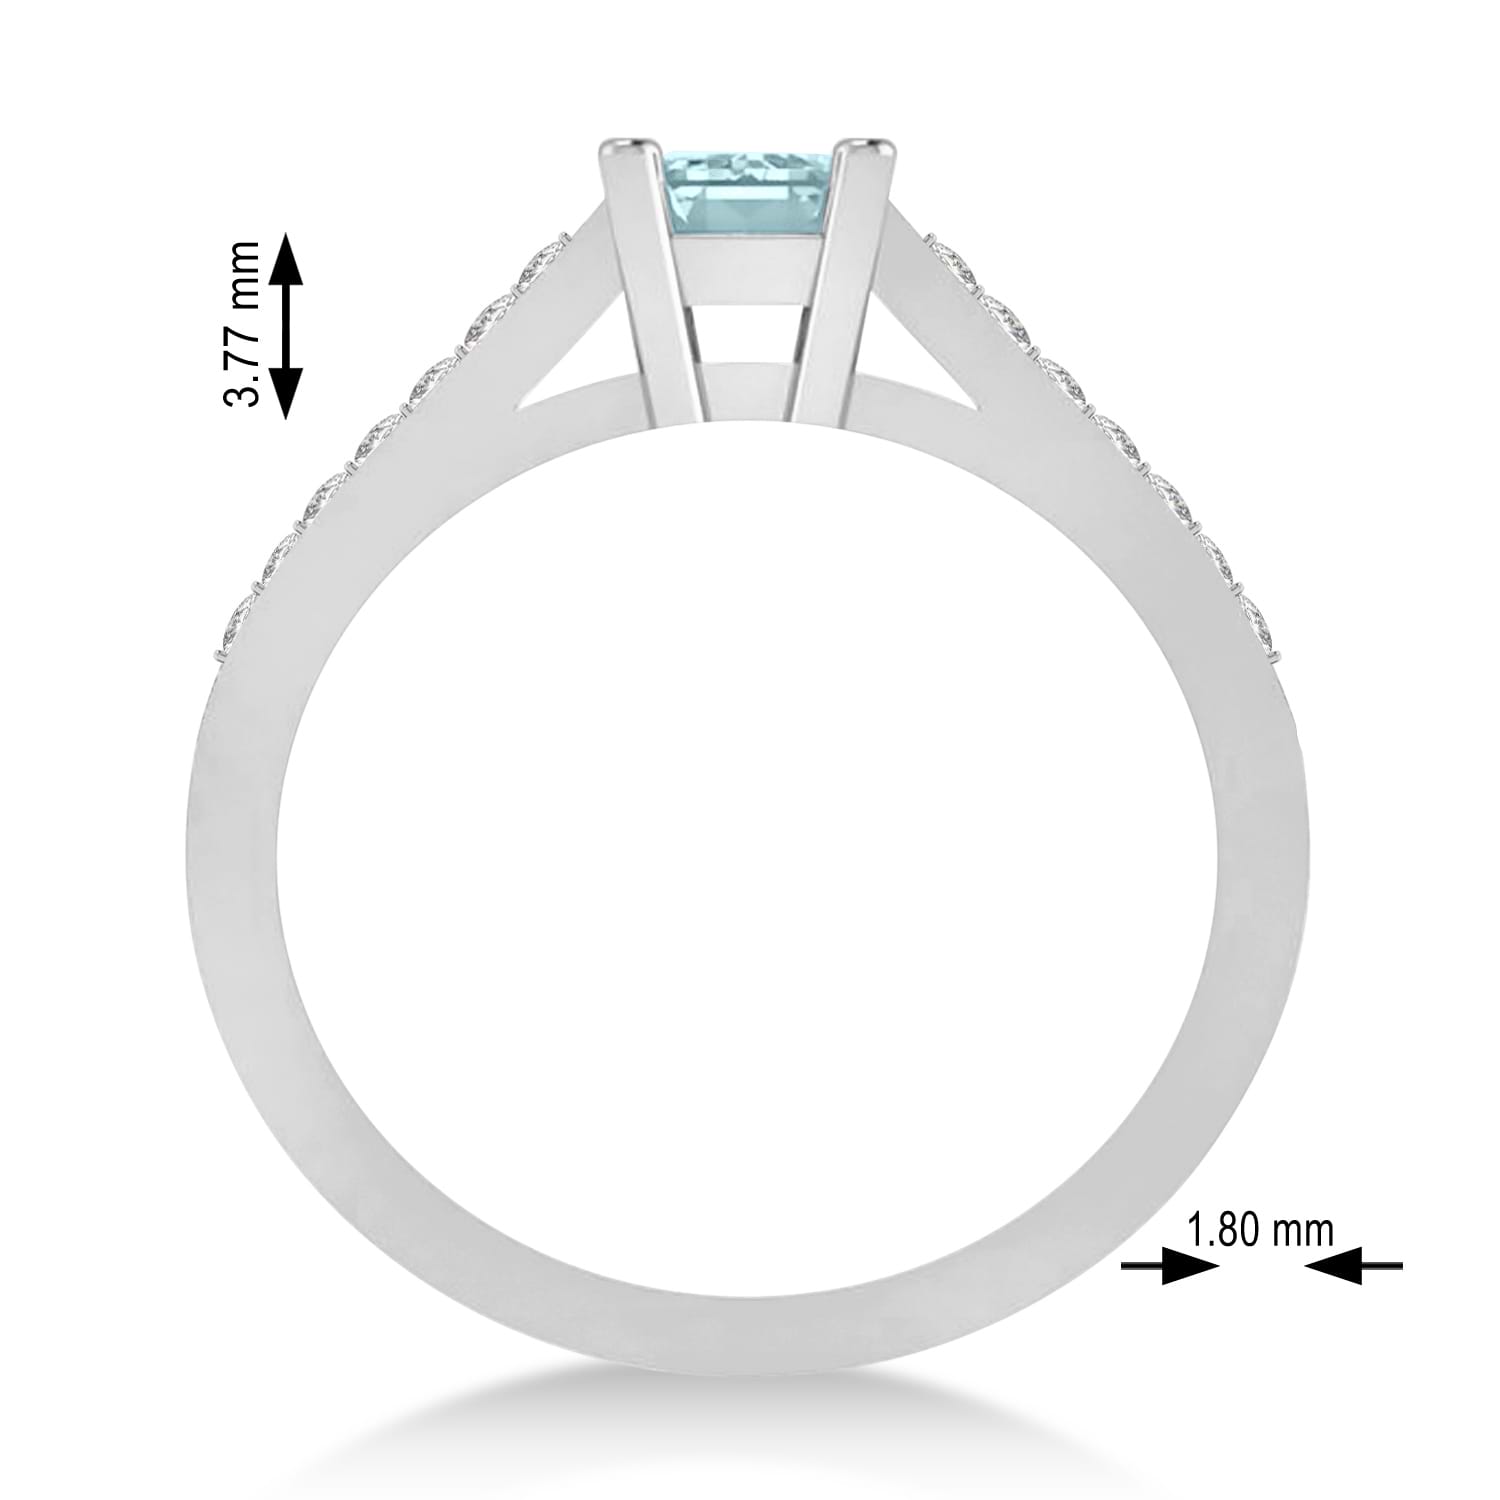 Aquamarine & Emerald-Cut Diamond Pre-Set Engagement Ring 14k White Gold (1.09ct)